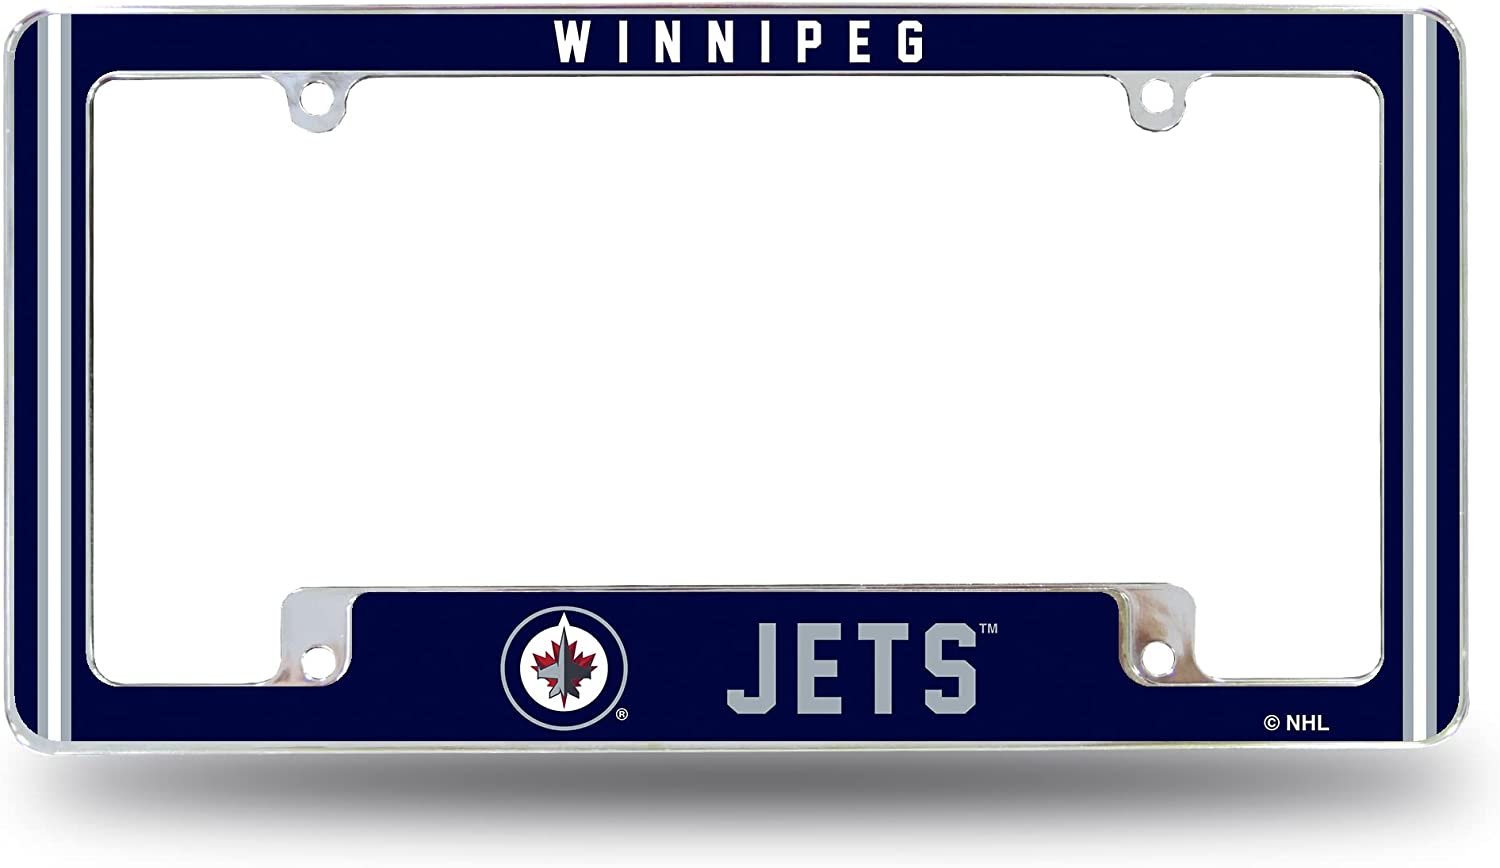 Winnipeg Jets Metal License Plate Frame Chrome Tag Cover Alternate Design 6x12 Inch